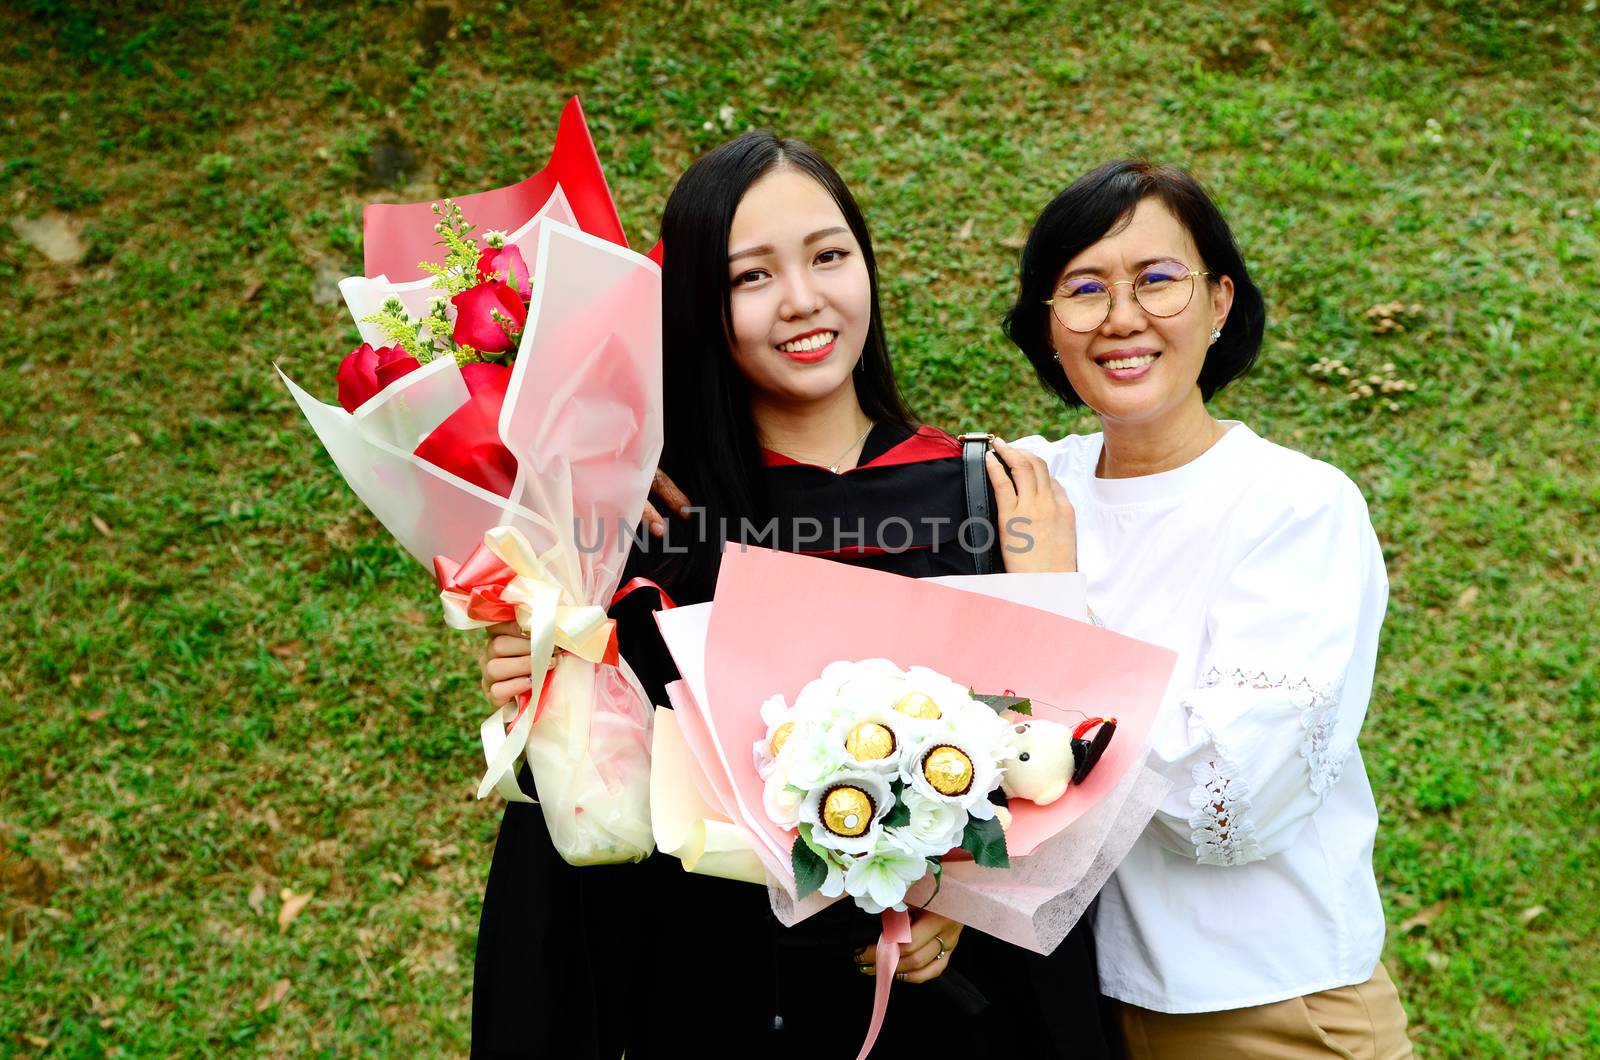 Asian university student and mother celebrating graduation